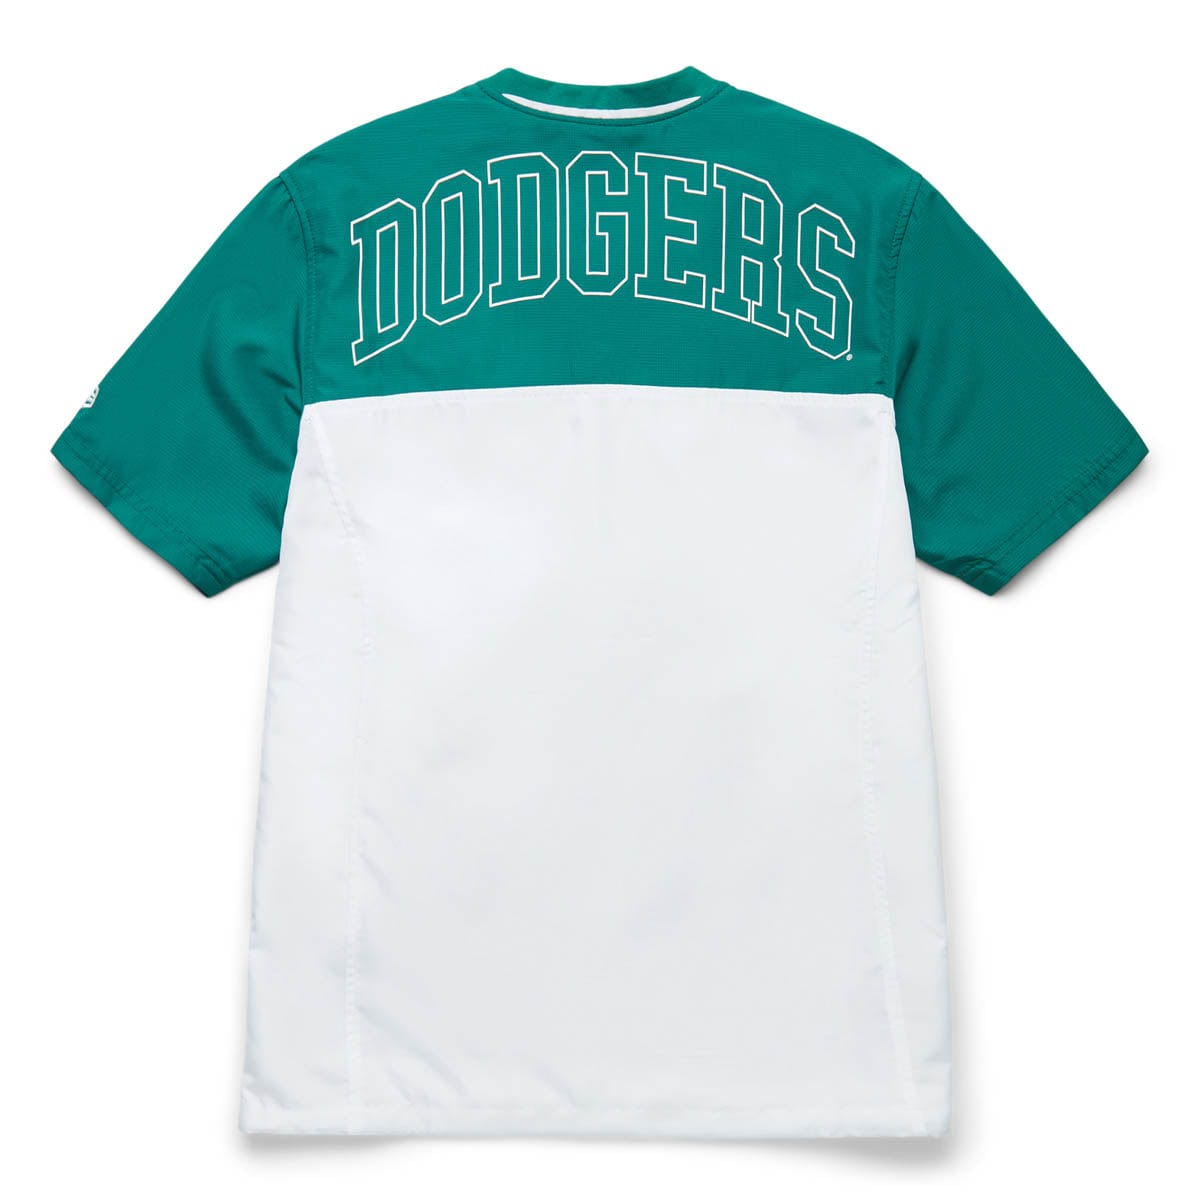 STARTER, Shirts, La Dodgers Buttonup Jersey